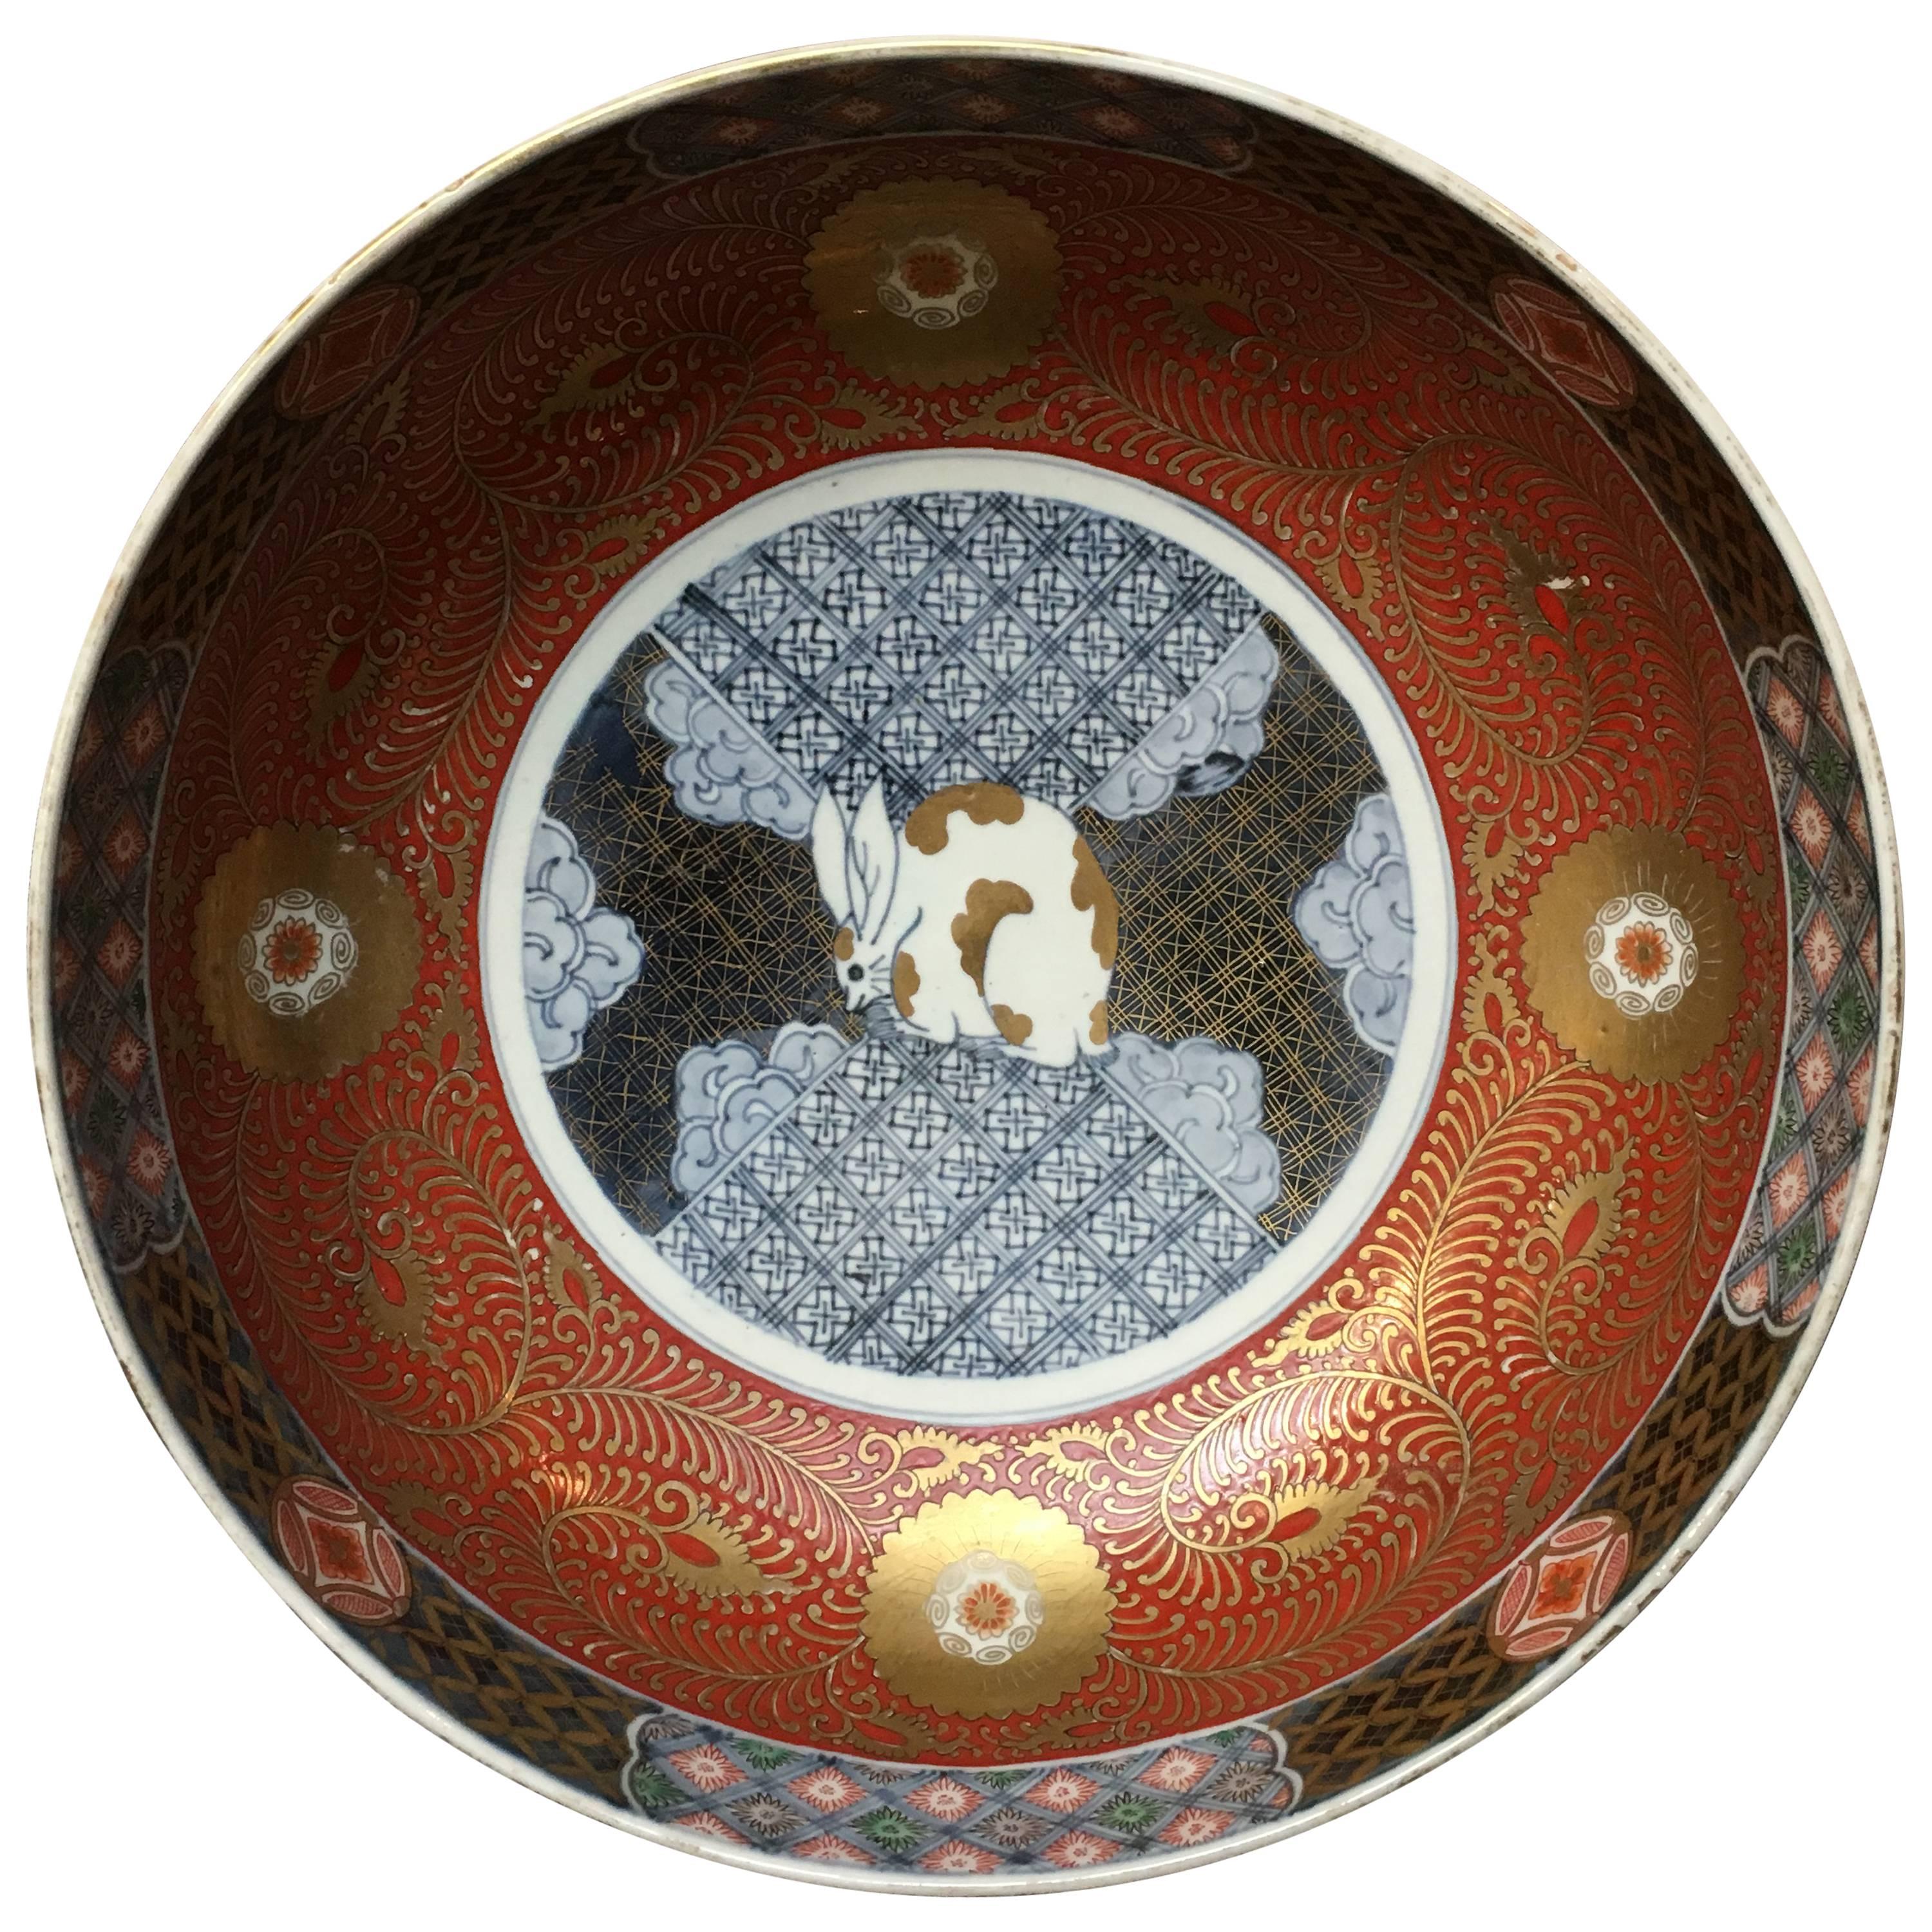 Large Japanese Edo Period Imari Bowl with Rabbit Design, Early 19th Century